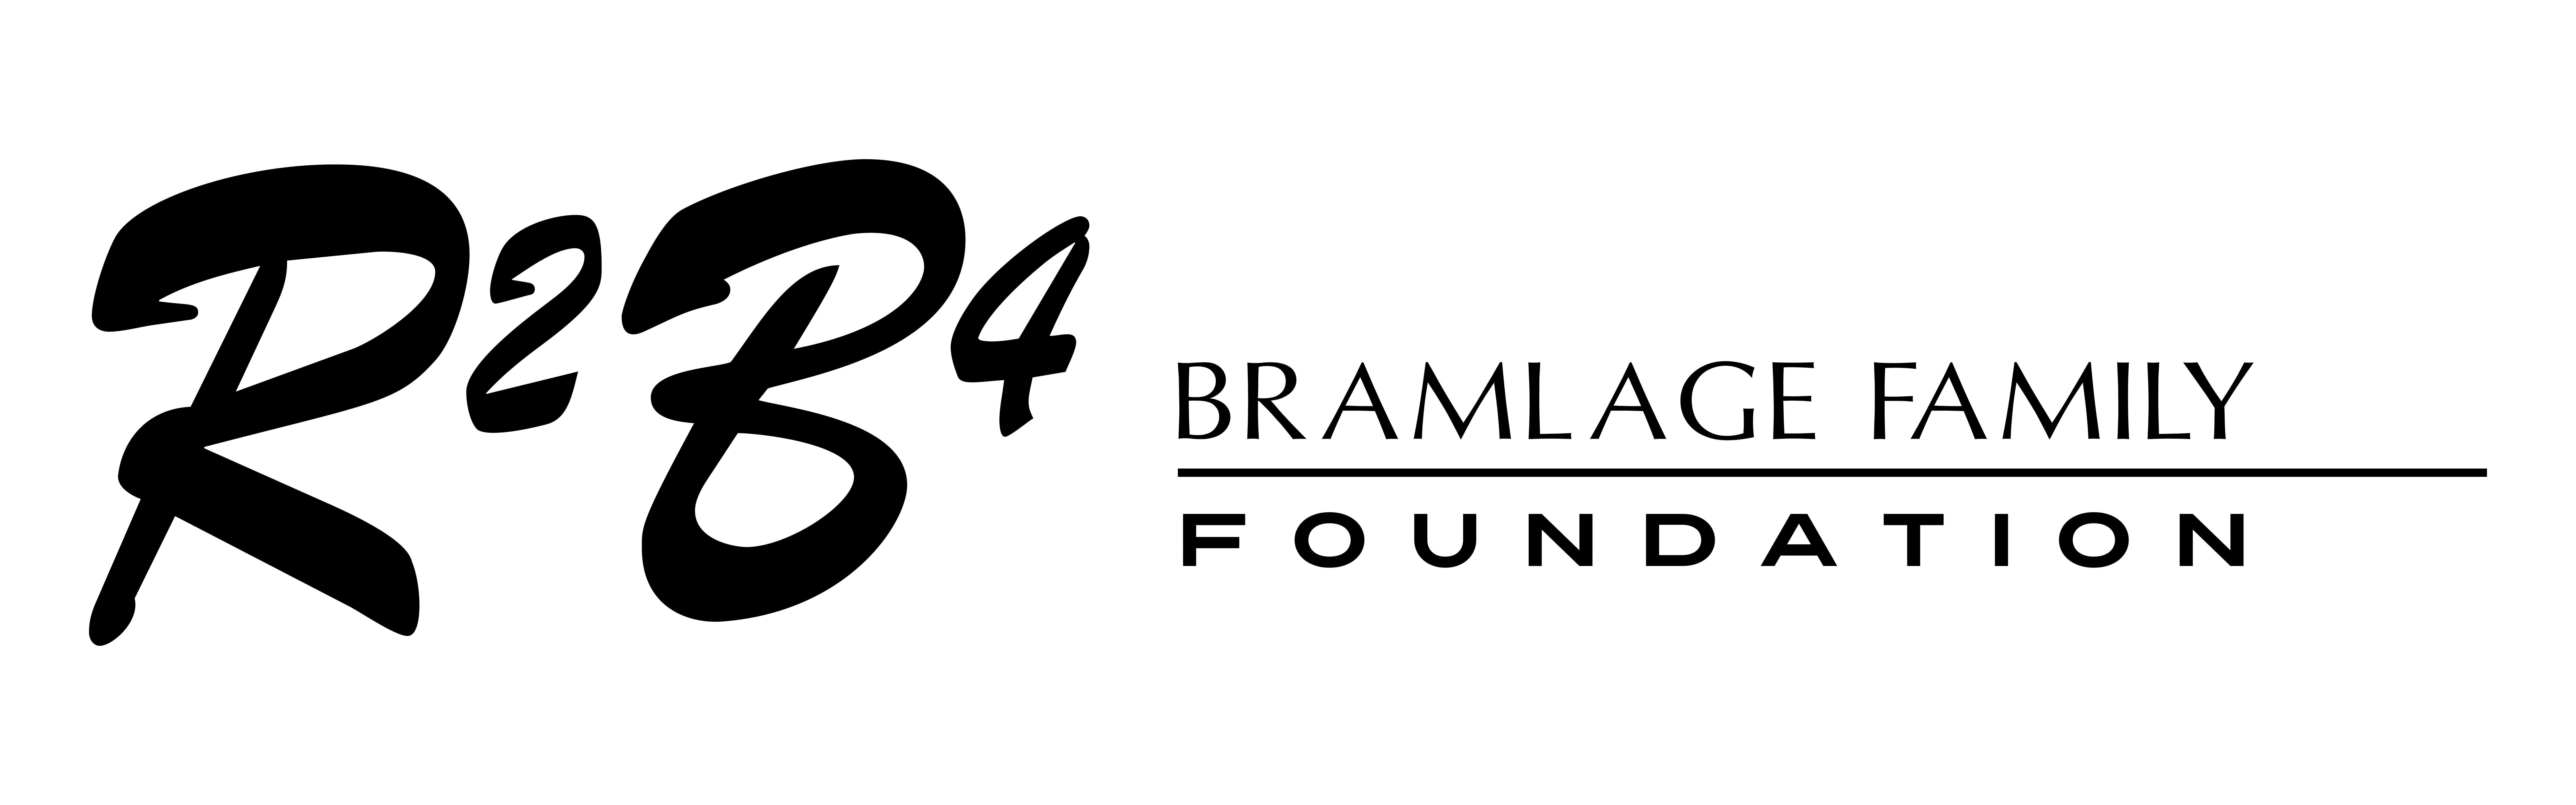 R2B4 Bramlage Family Foundation